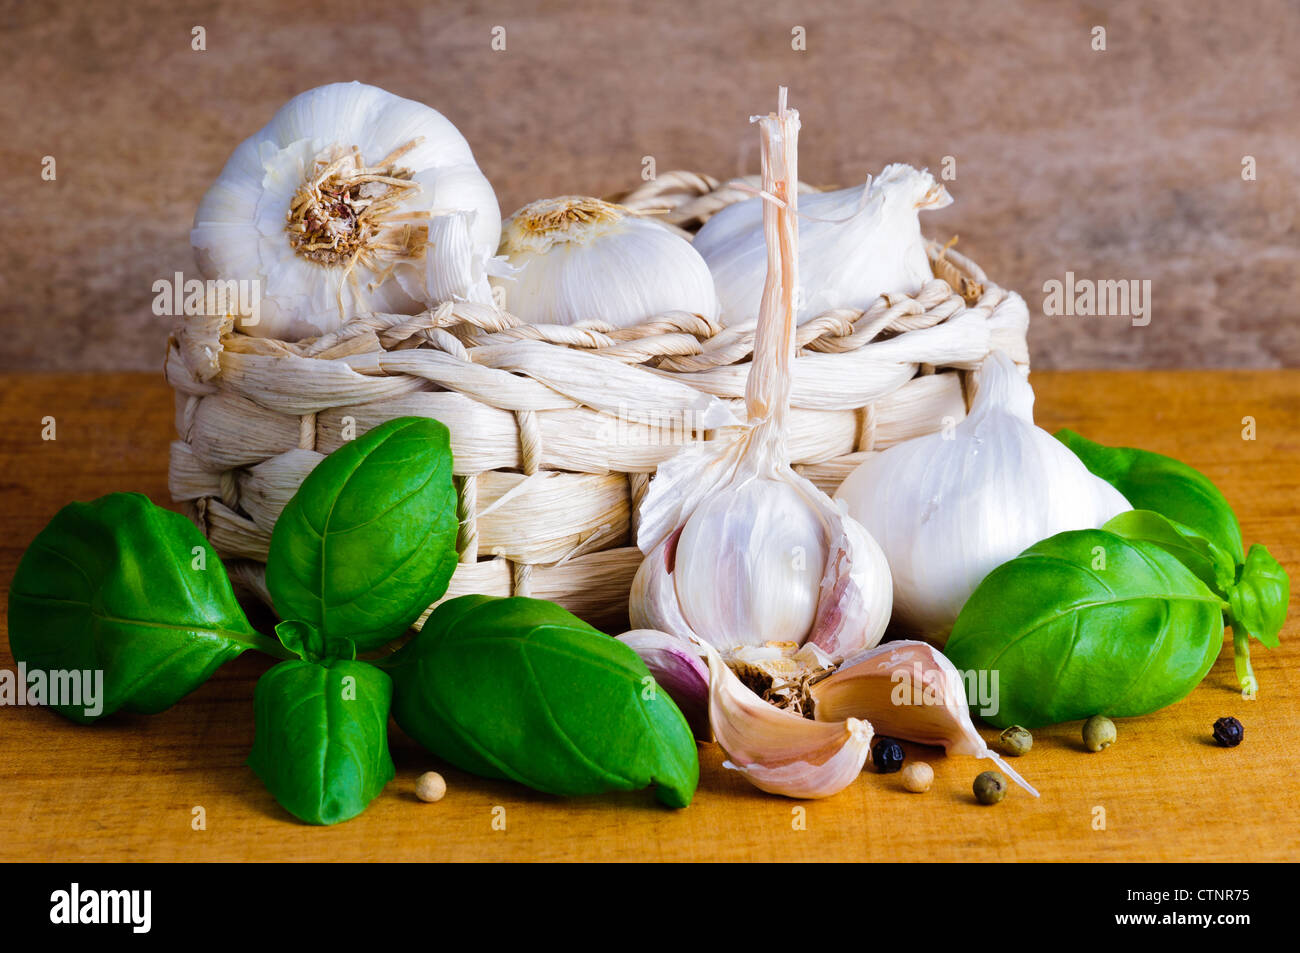 Still life with organic garlic and basil Stock Photo